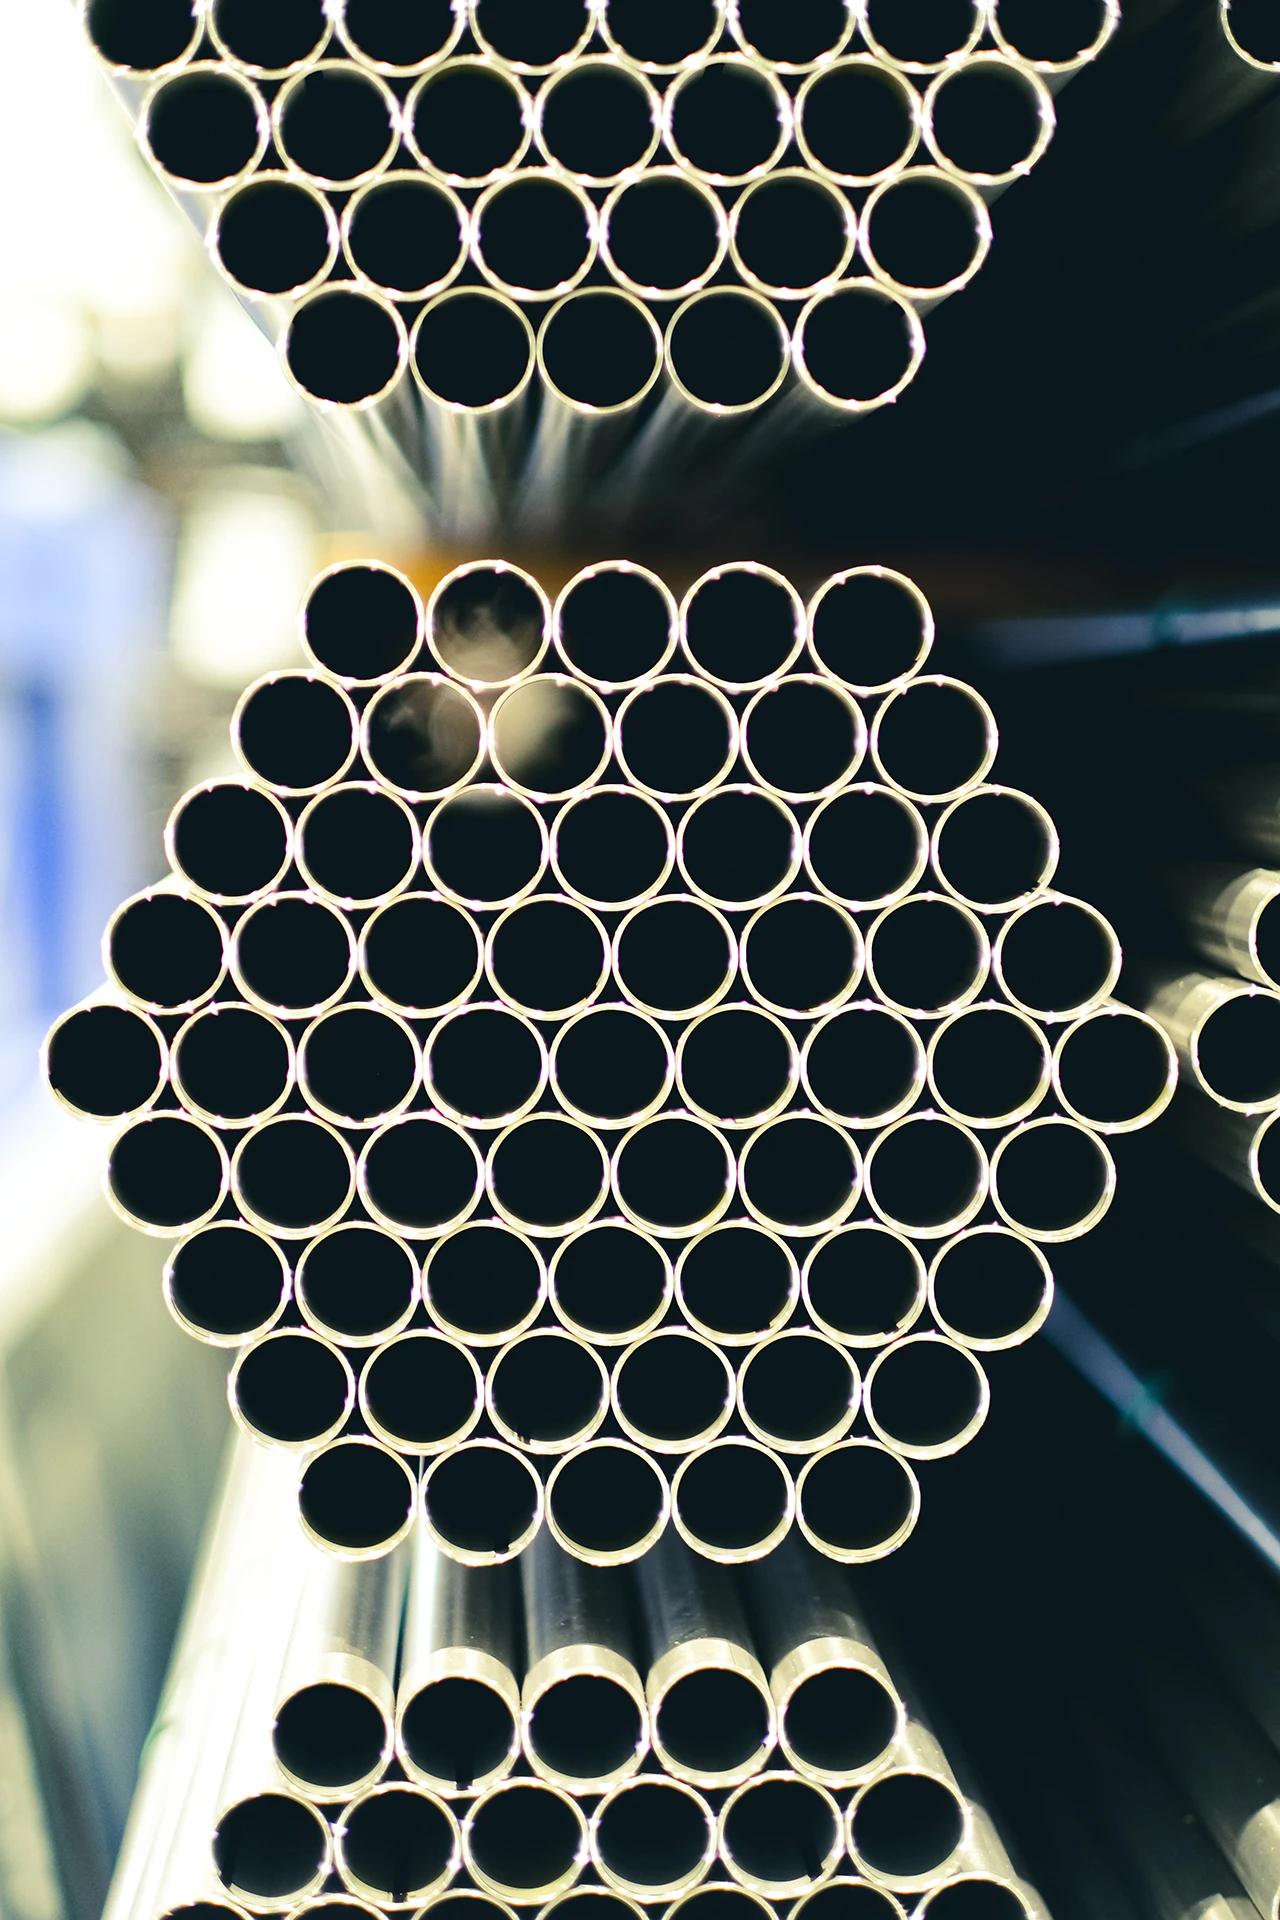 Closeup of metal pipes in storage racks